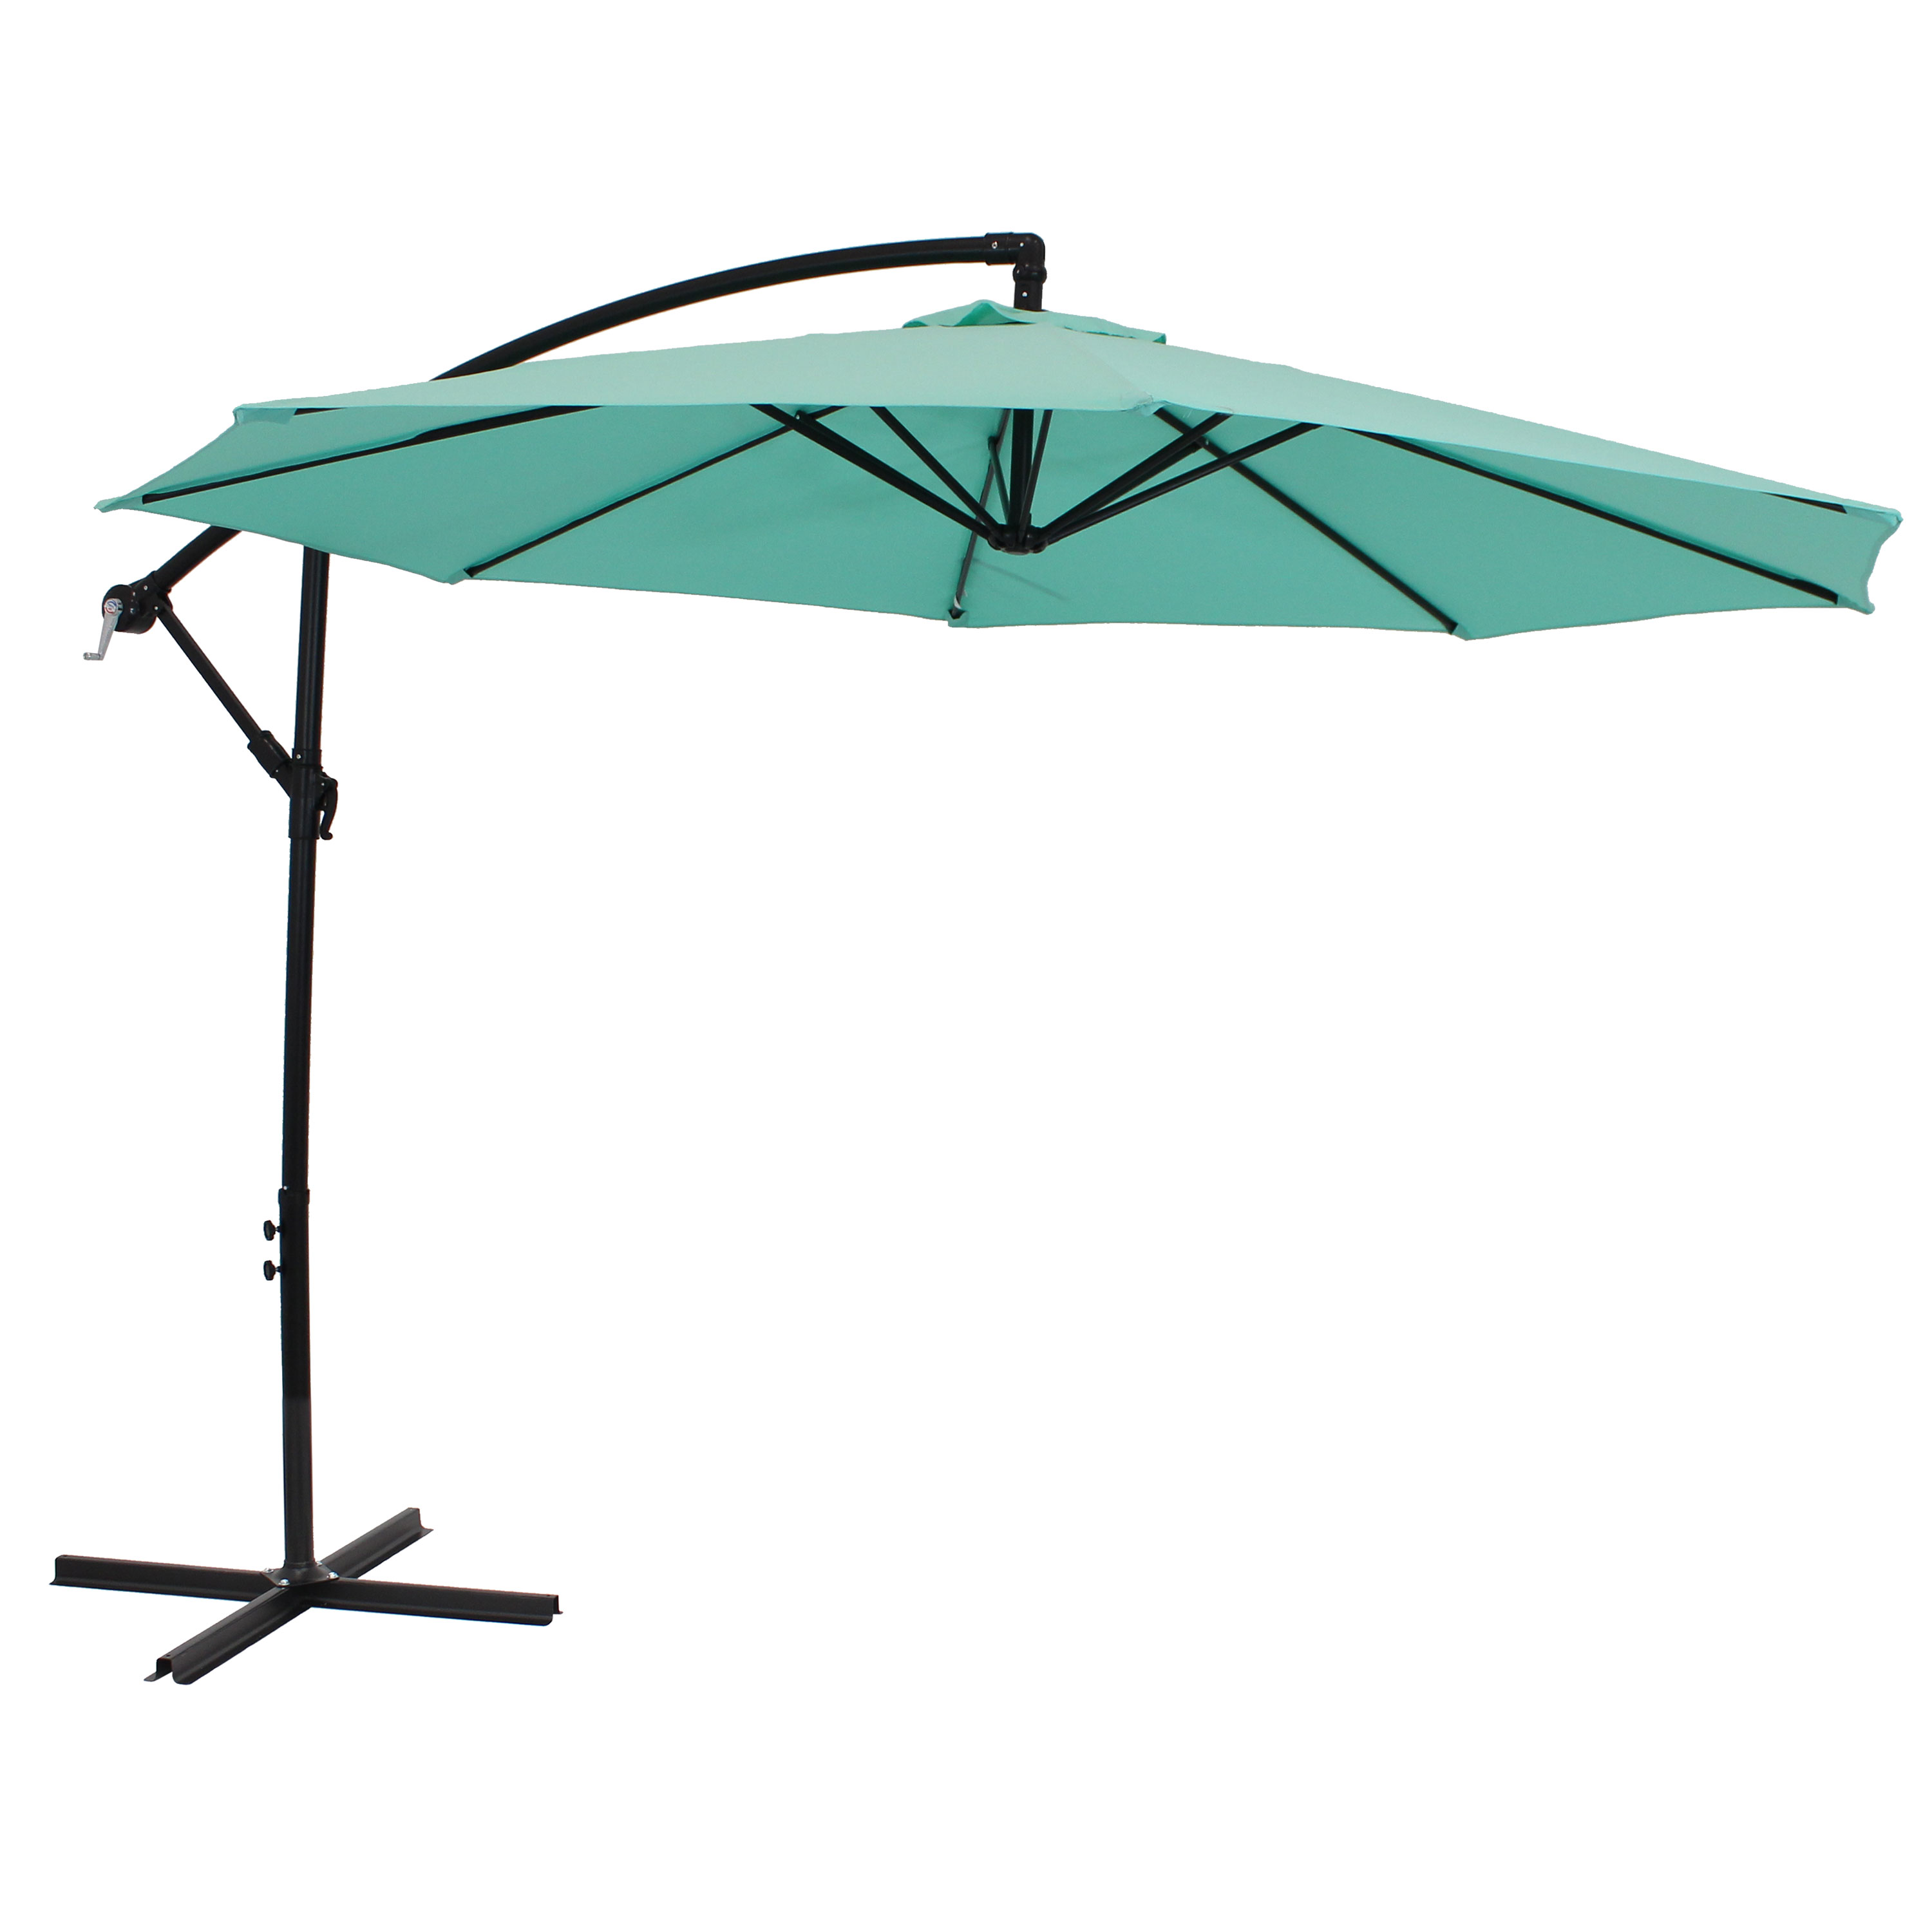 Sunnydaze Offset Outdoor Patio Umbrella with Crank - 9-Foot - Seafoam